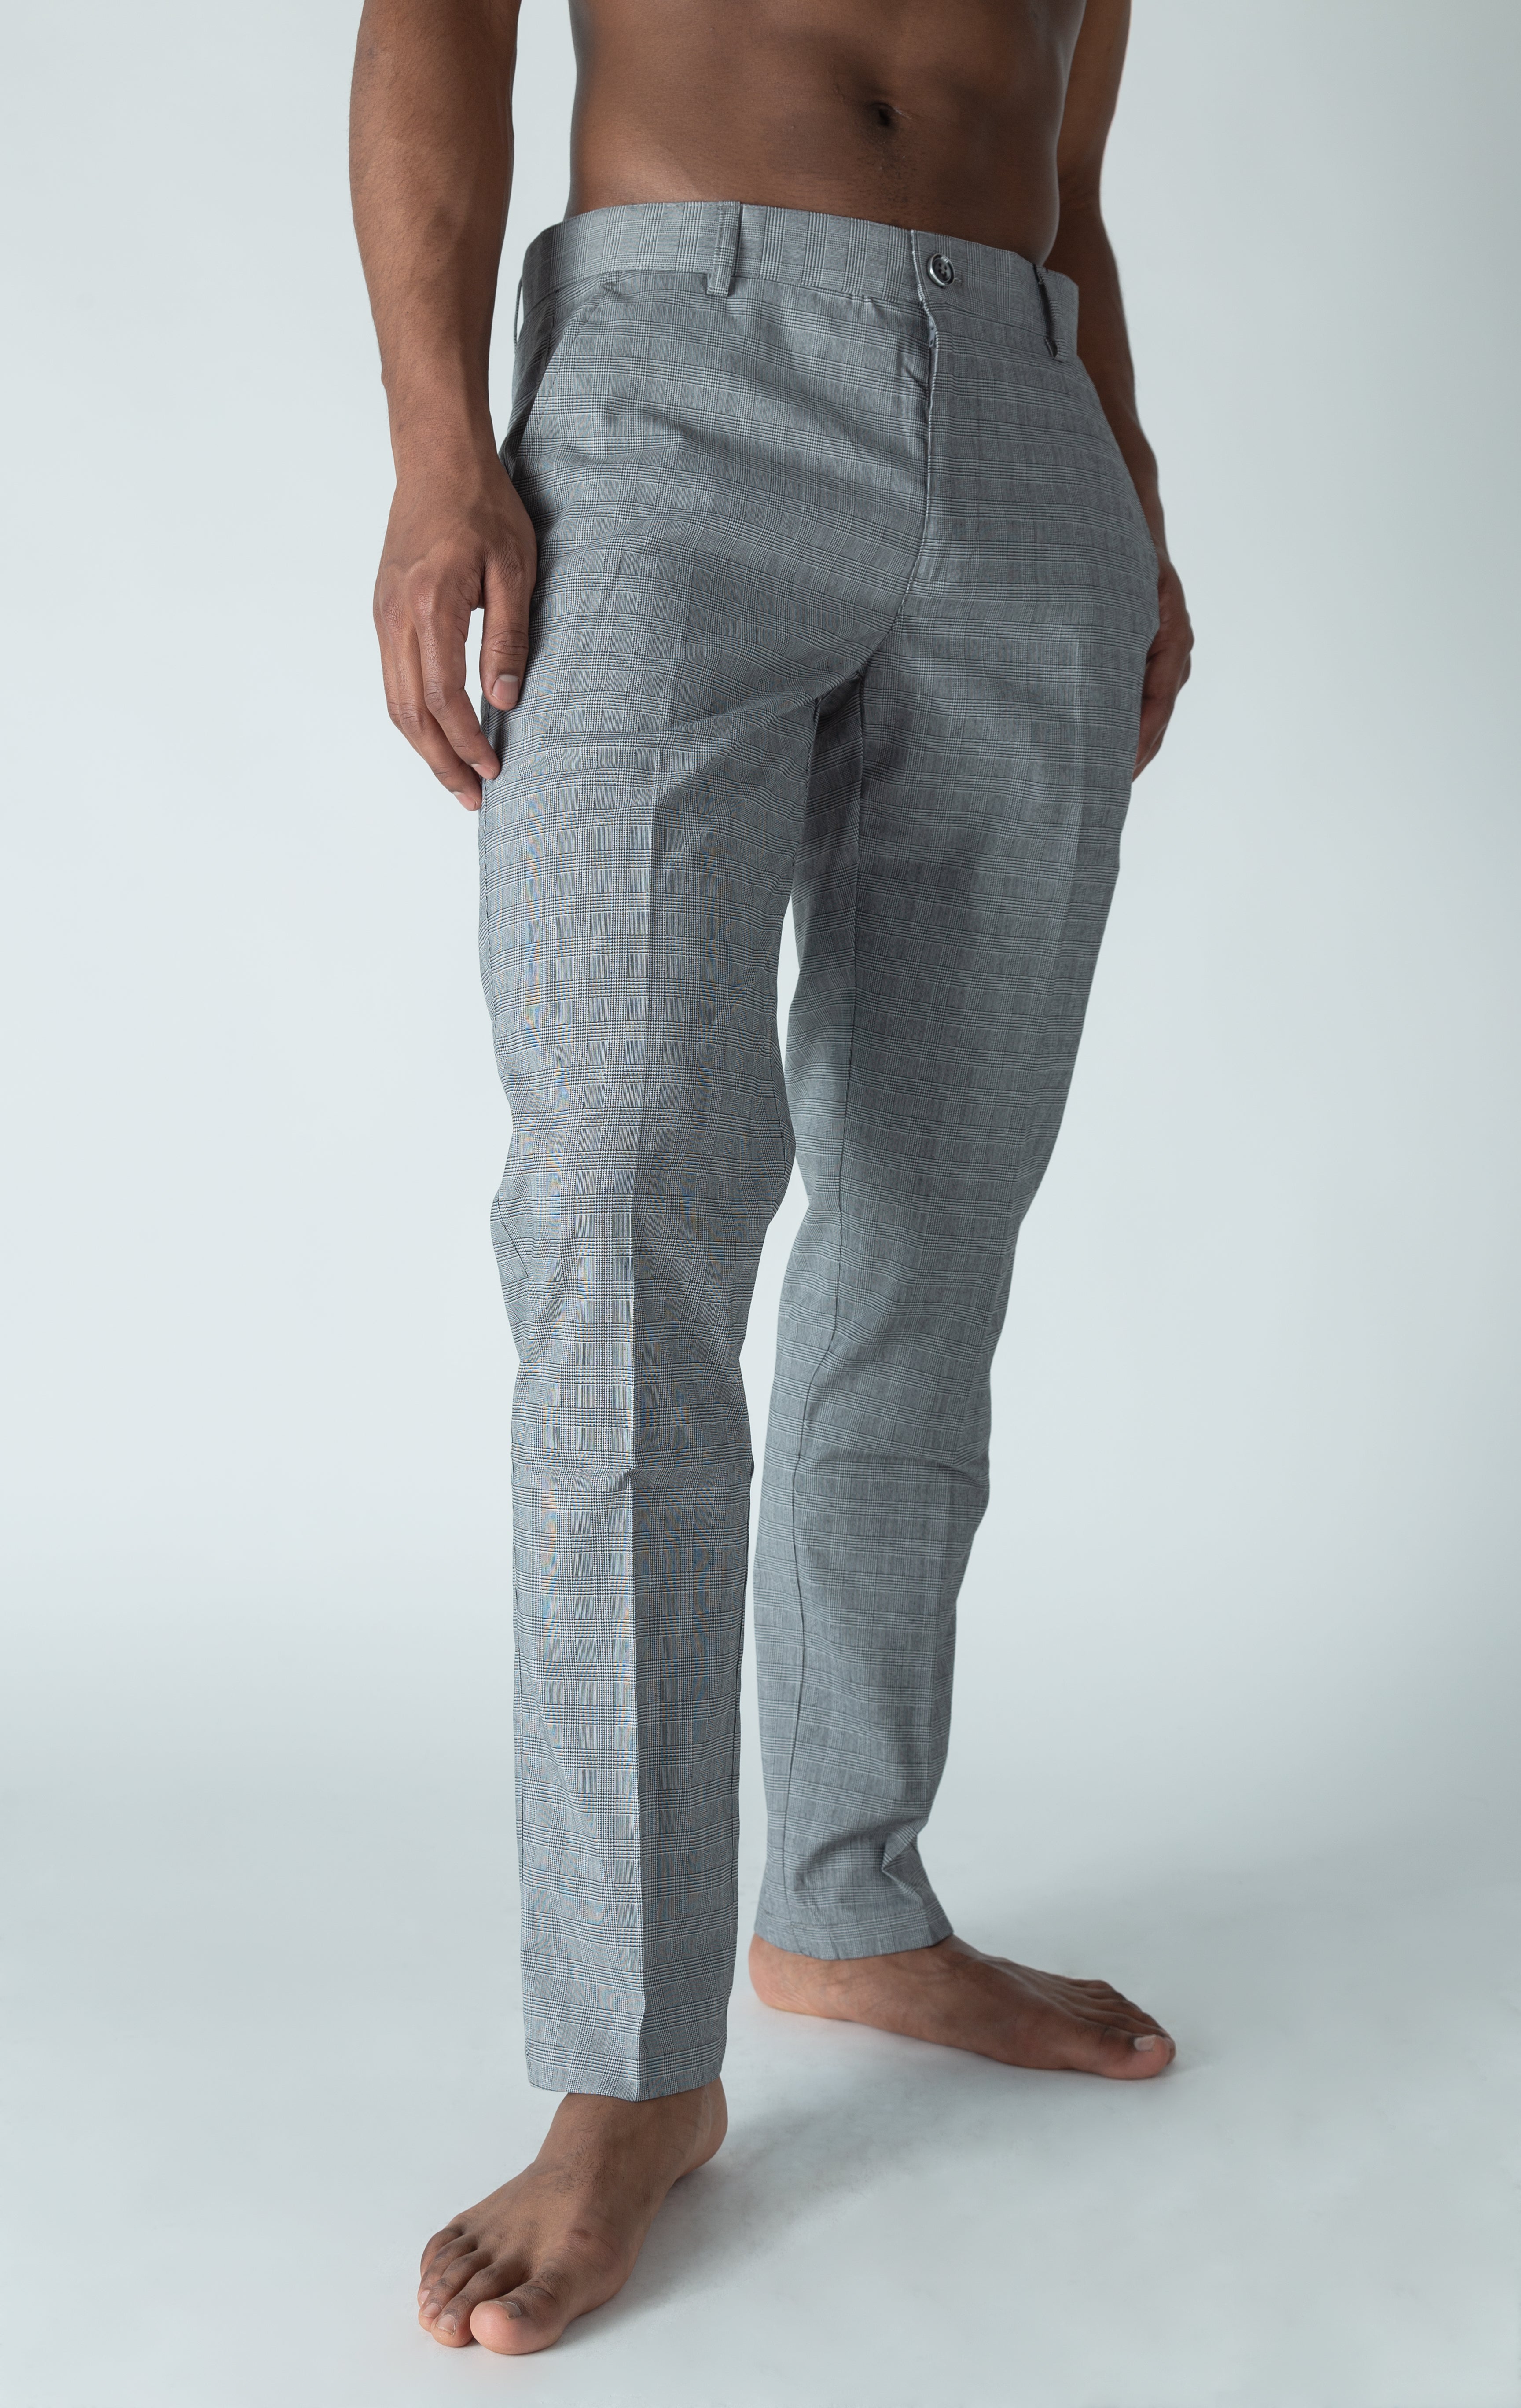 Grey men's plaid dress pants.